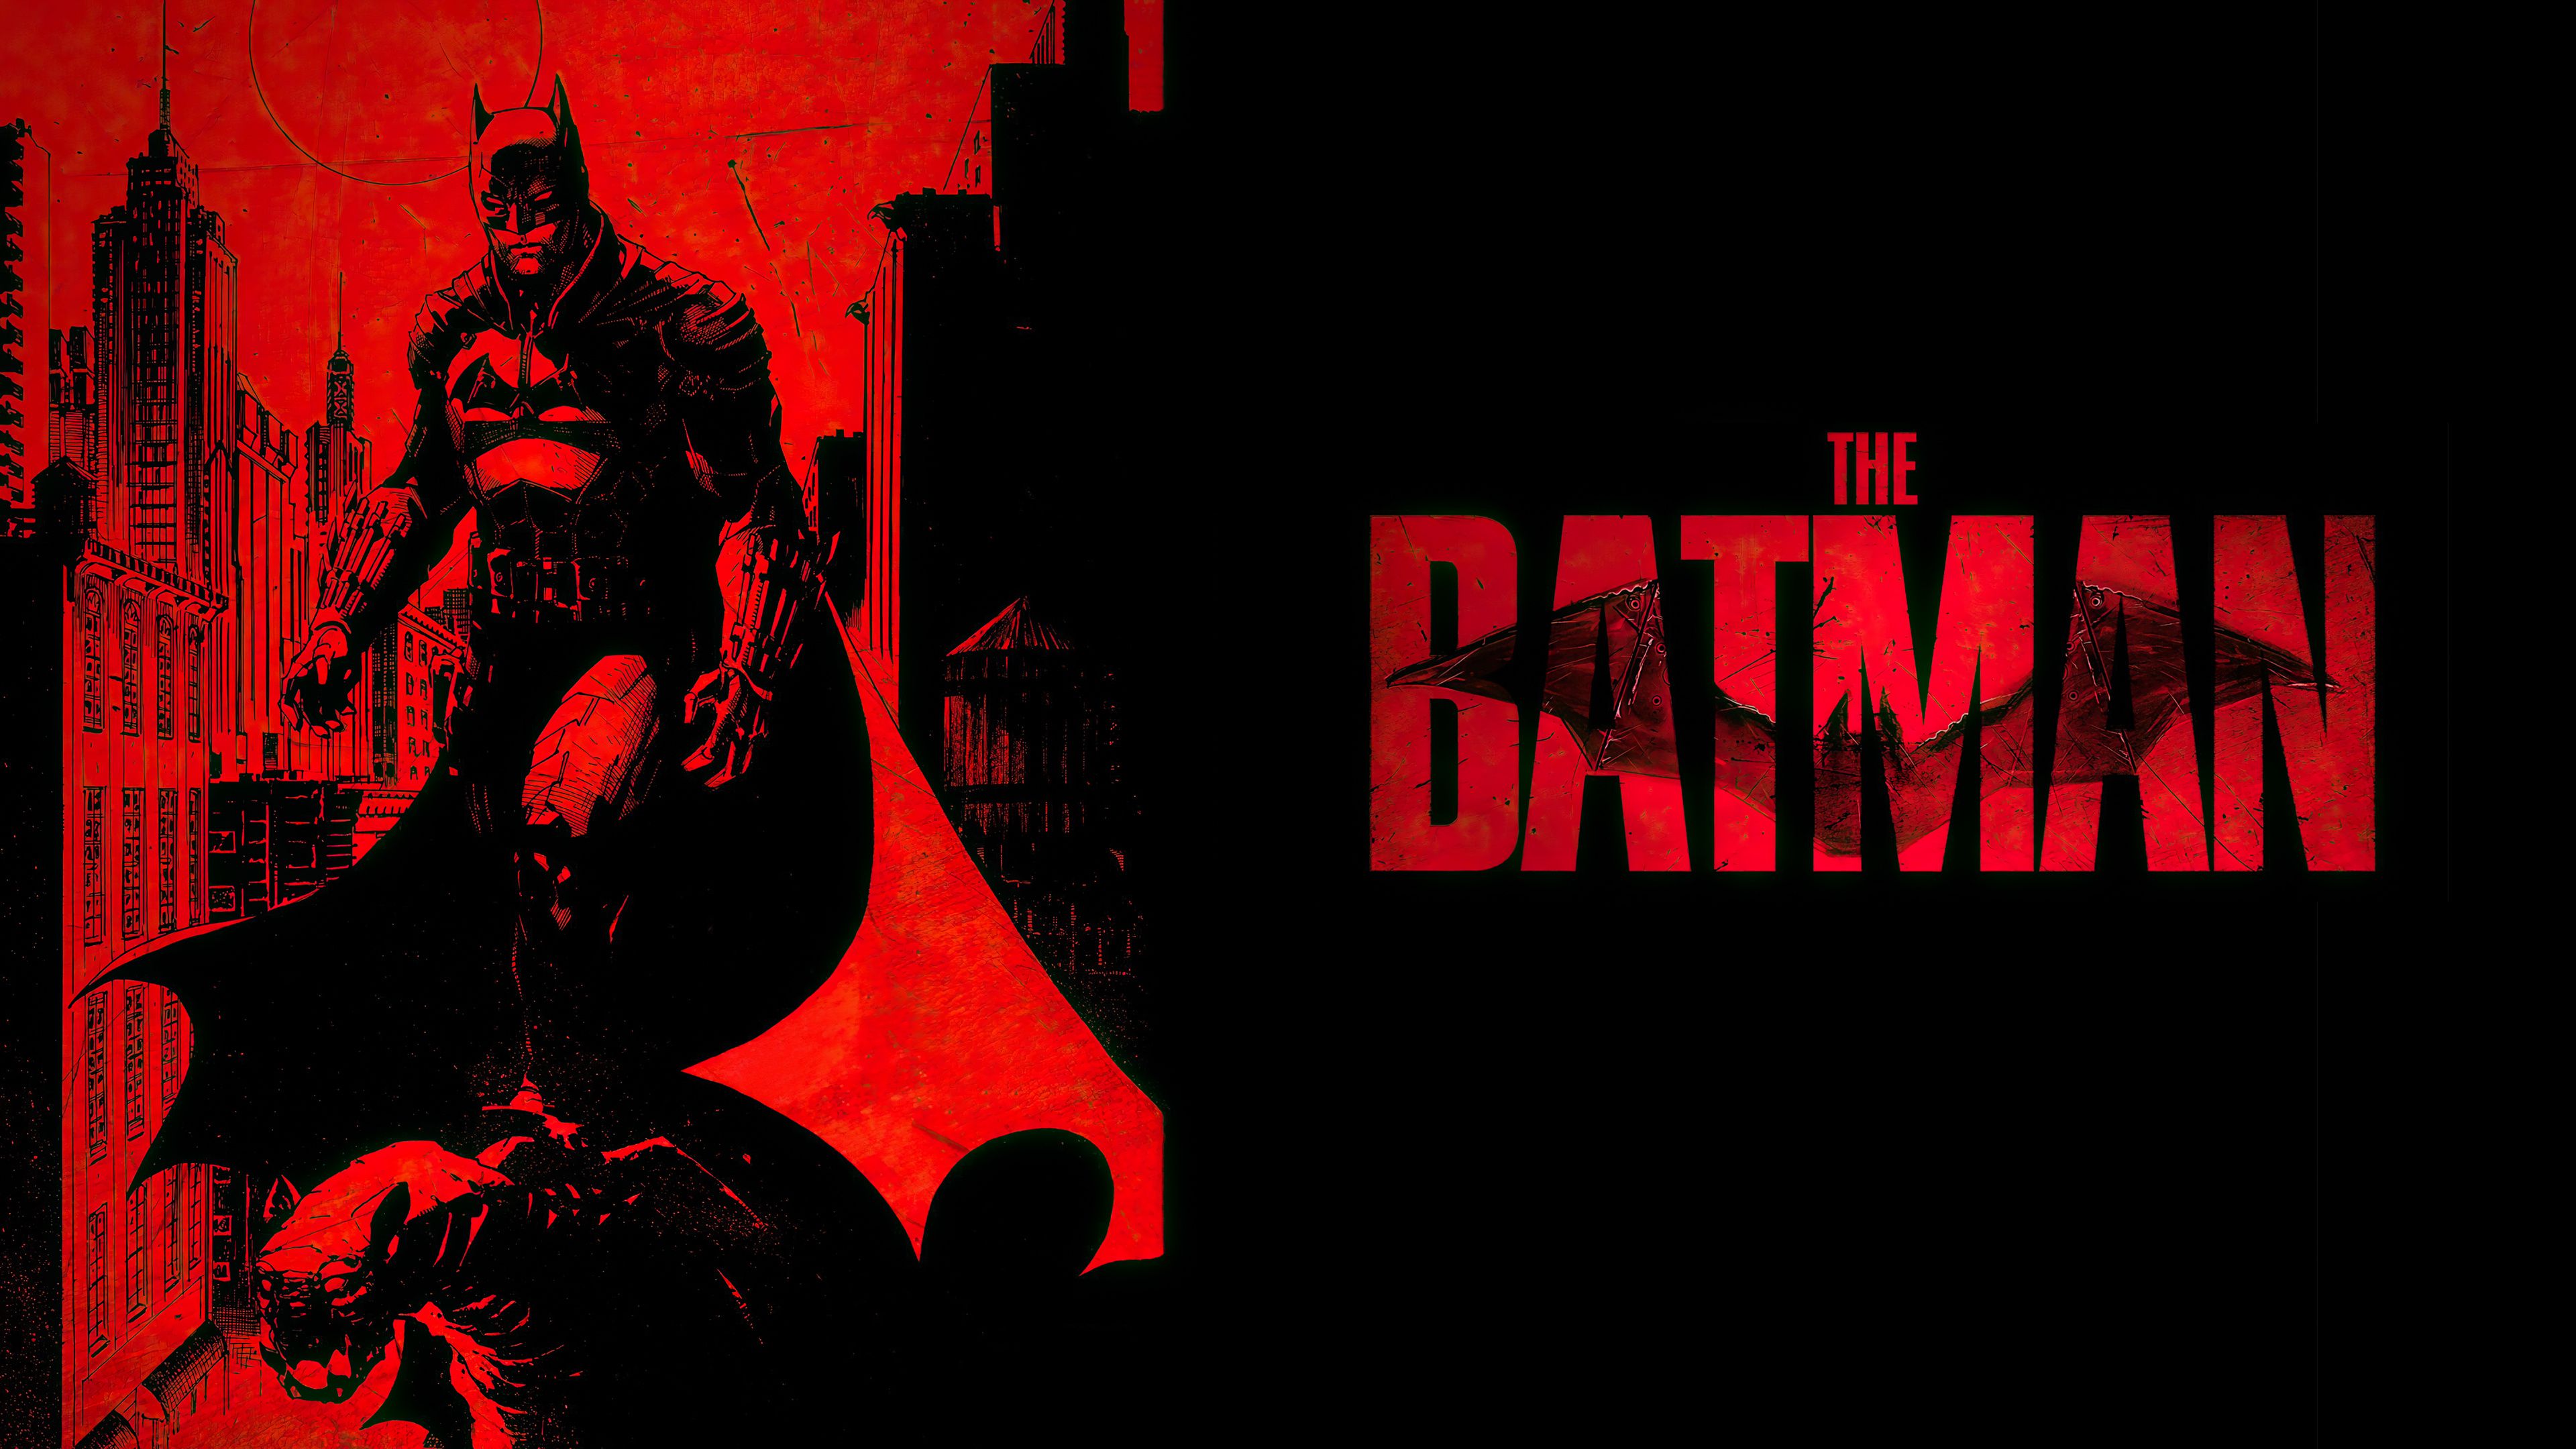 Batman: The Dark Knight Returns wallpapers for desktop, download